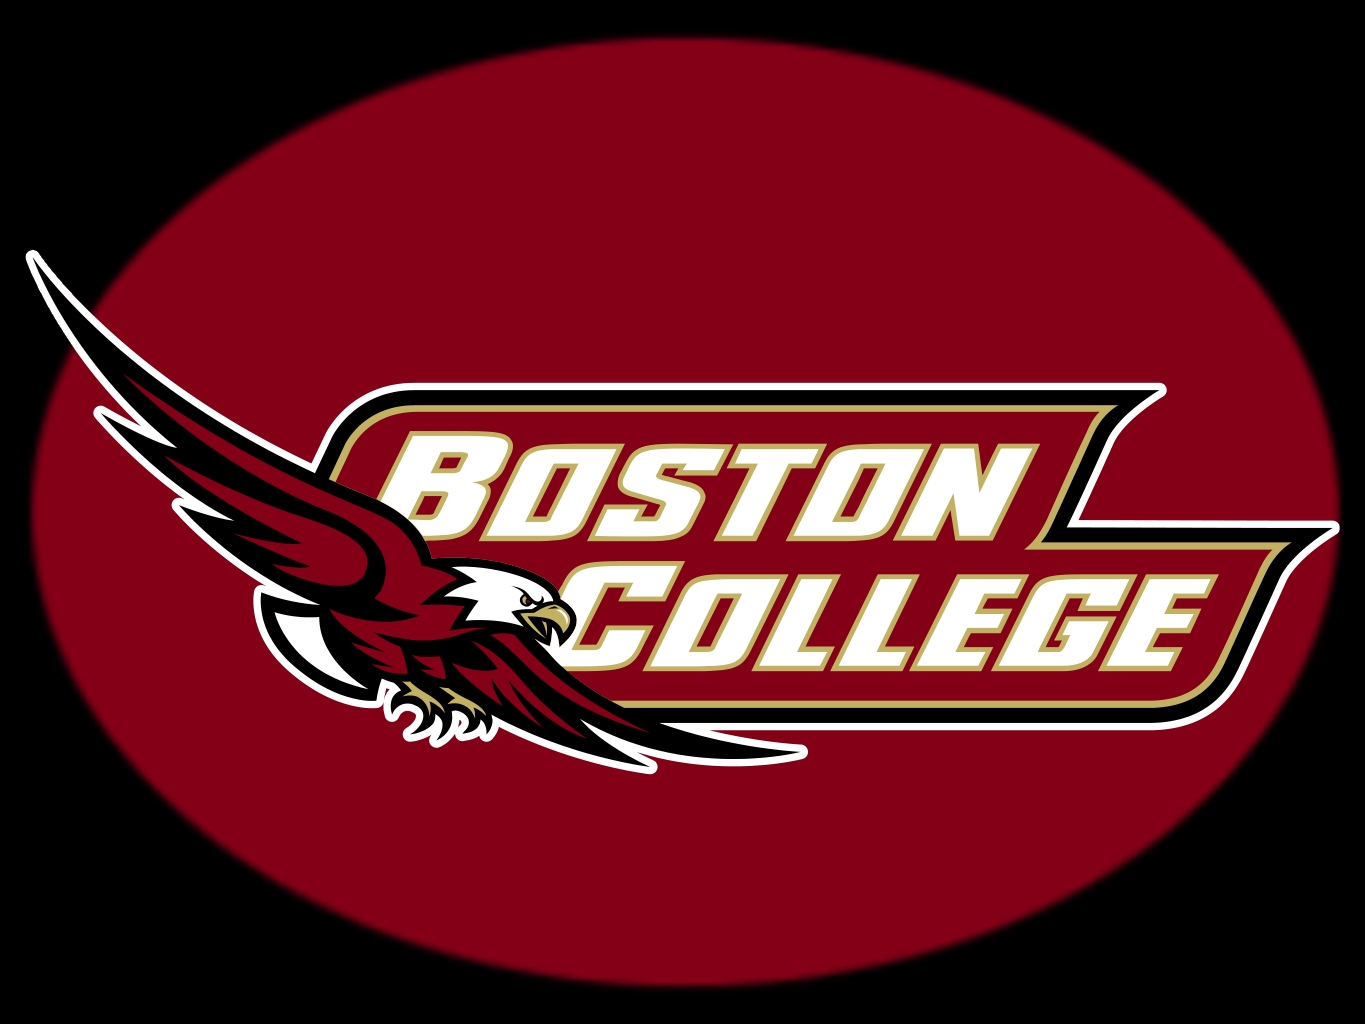 Boston College Logo httpwwwsports logos screensaverscom